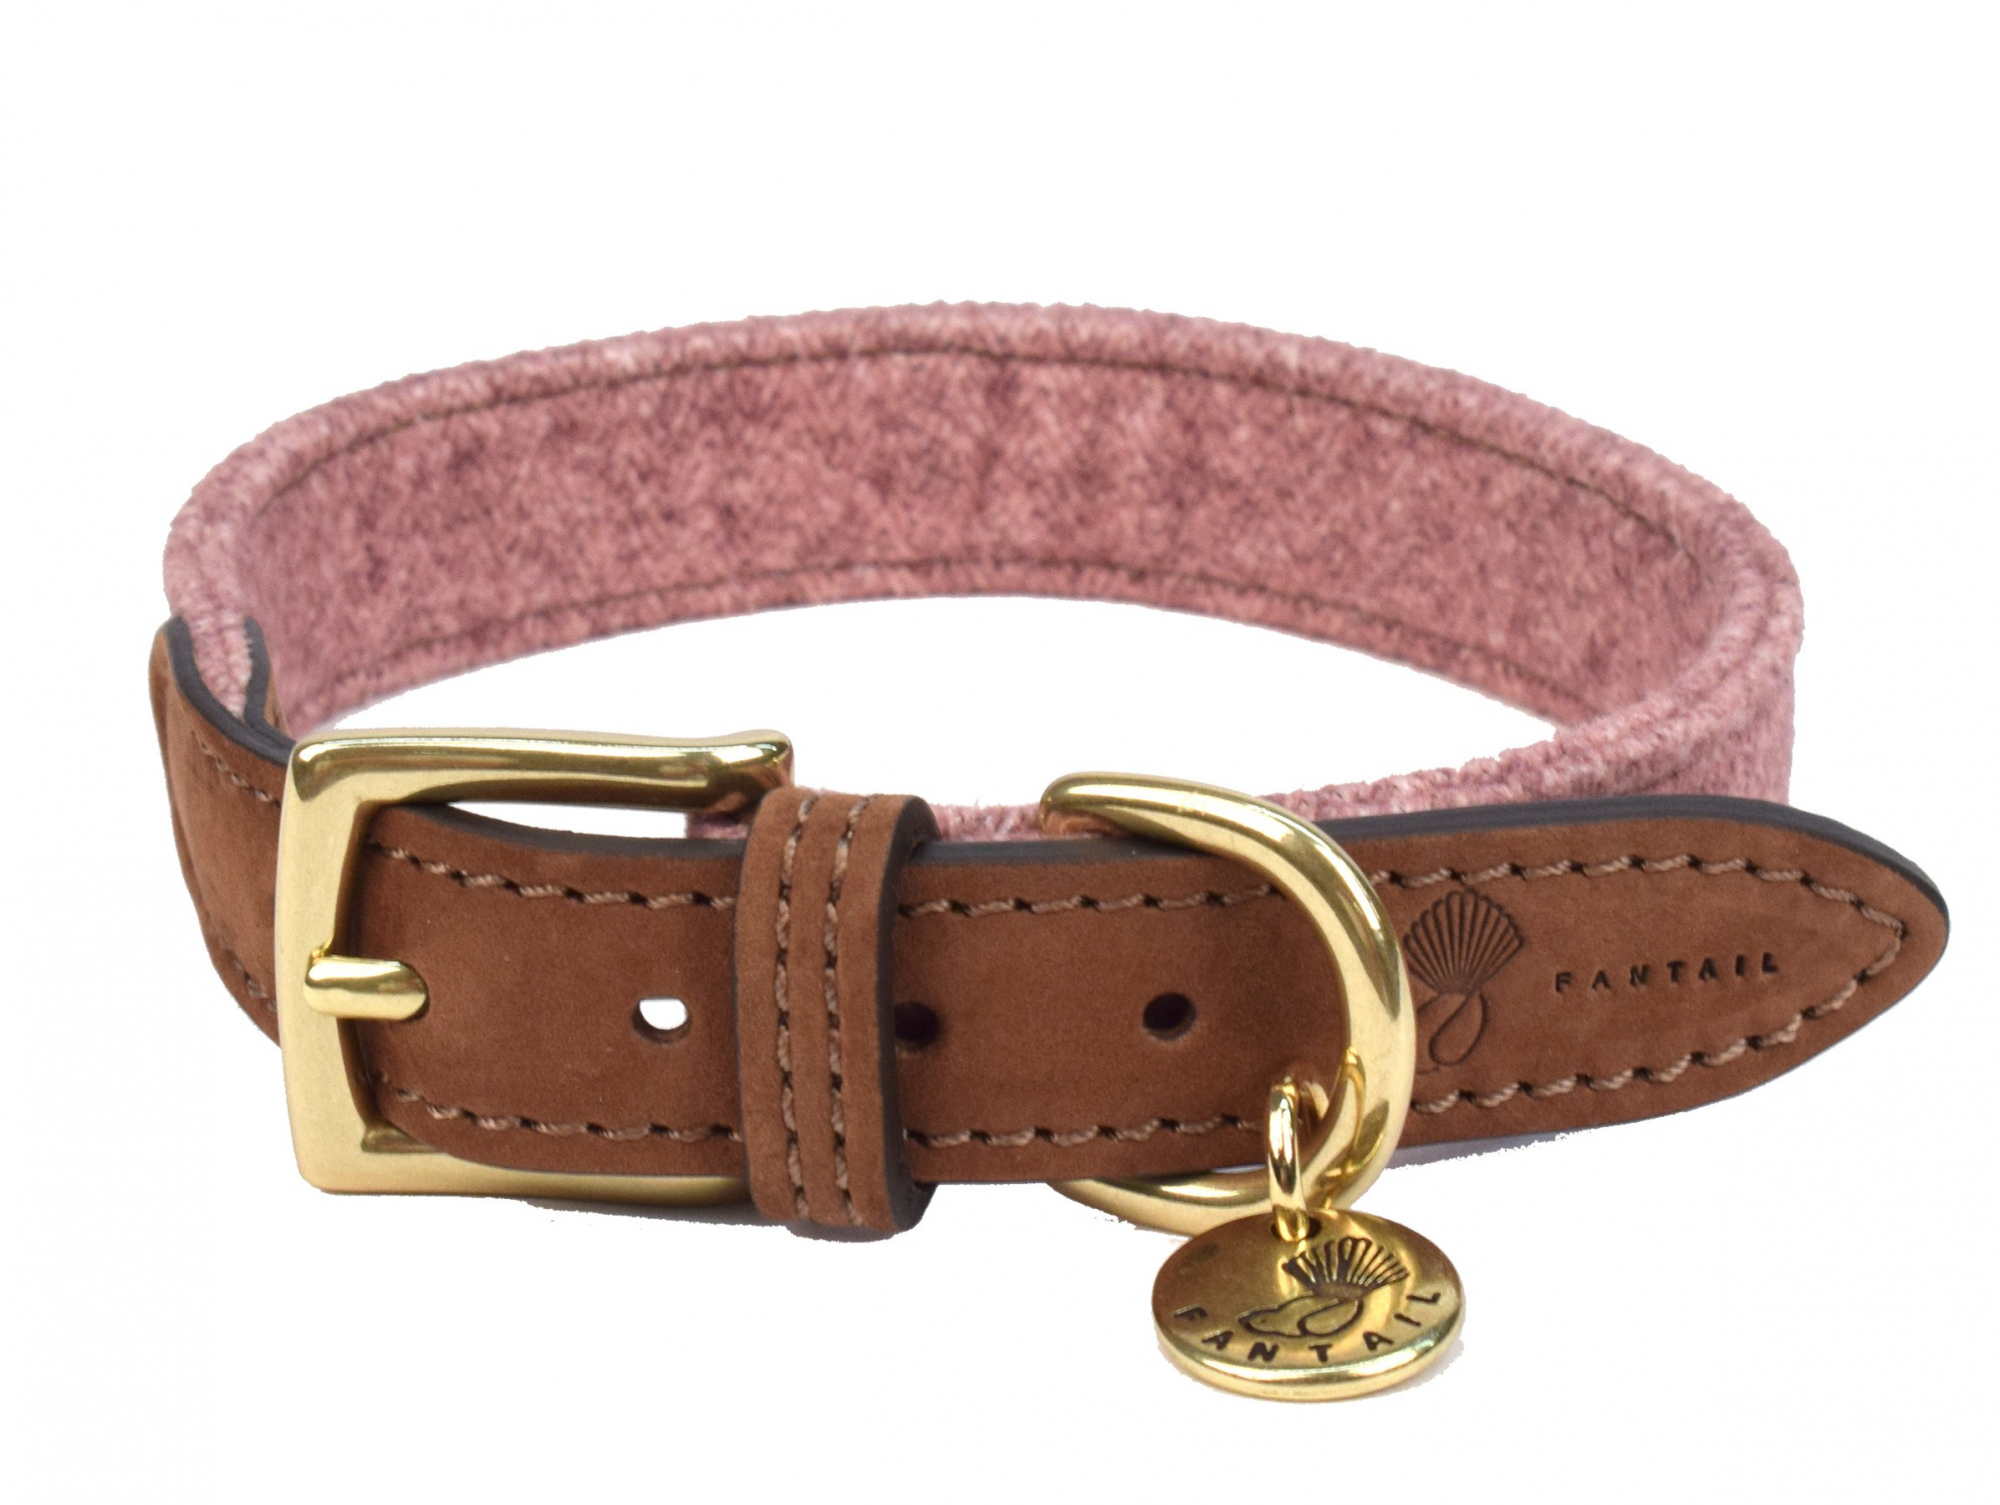 Fantail Lederhalsband mit rosa Stoff